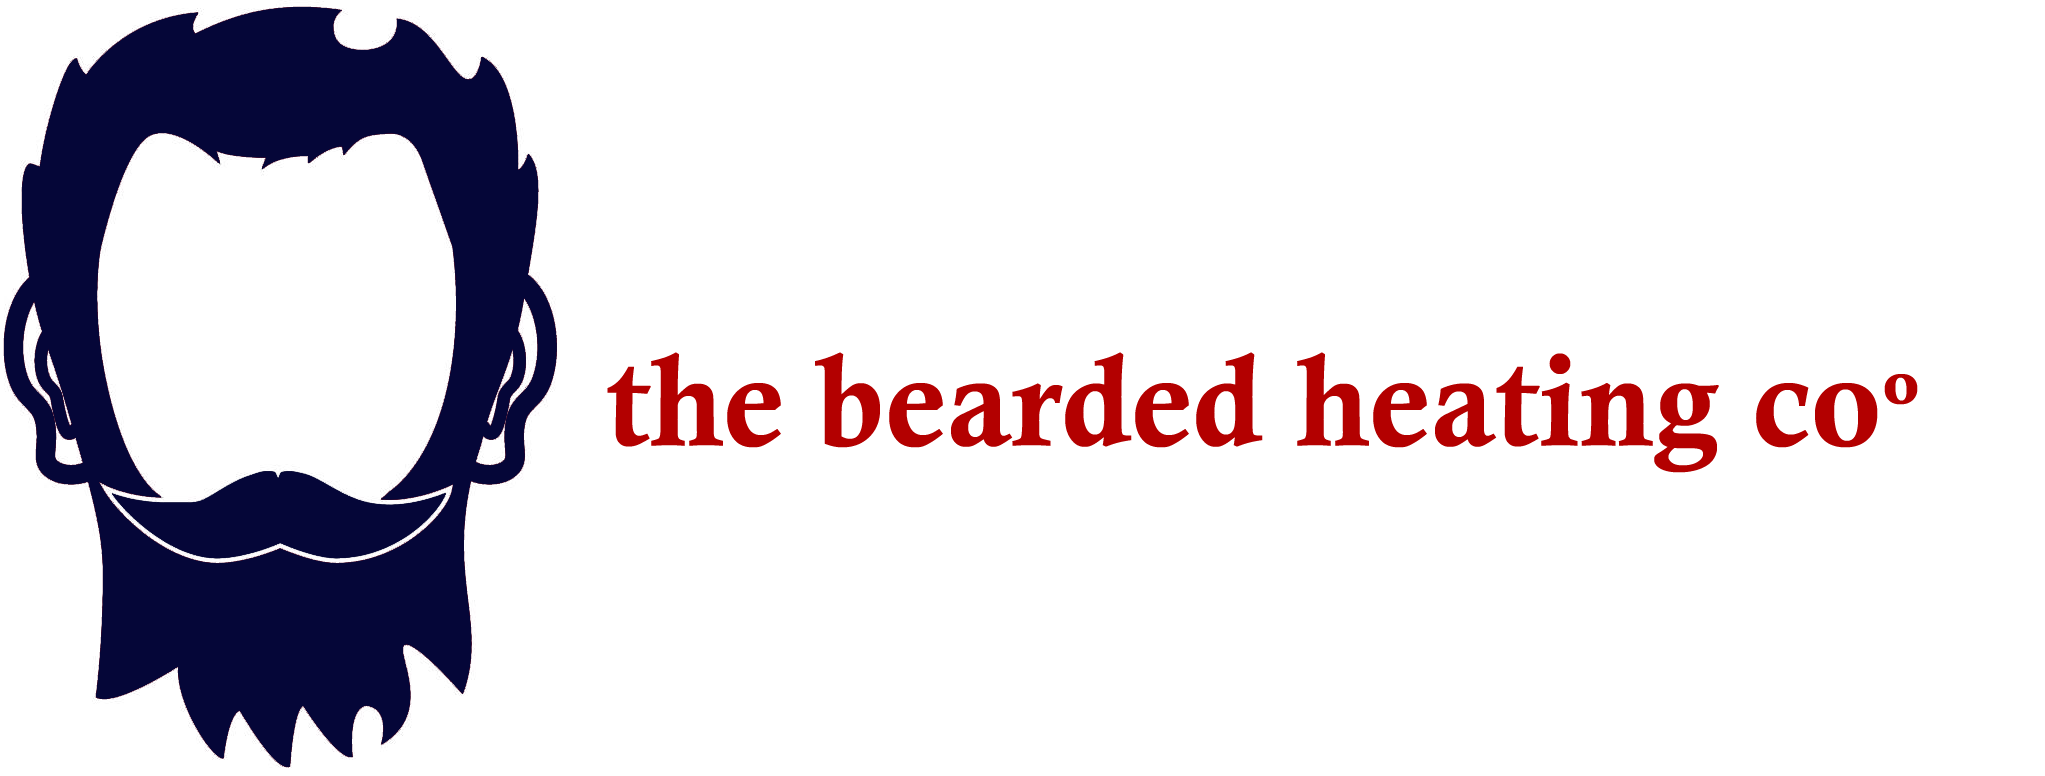 The Bearded Heating Coº